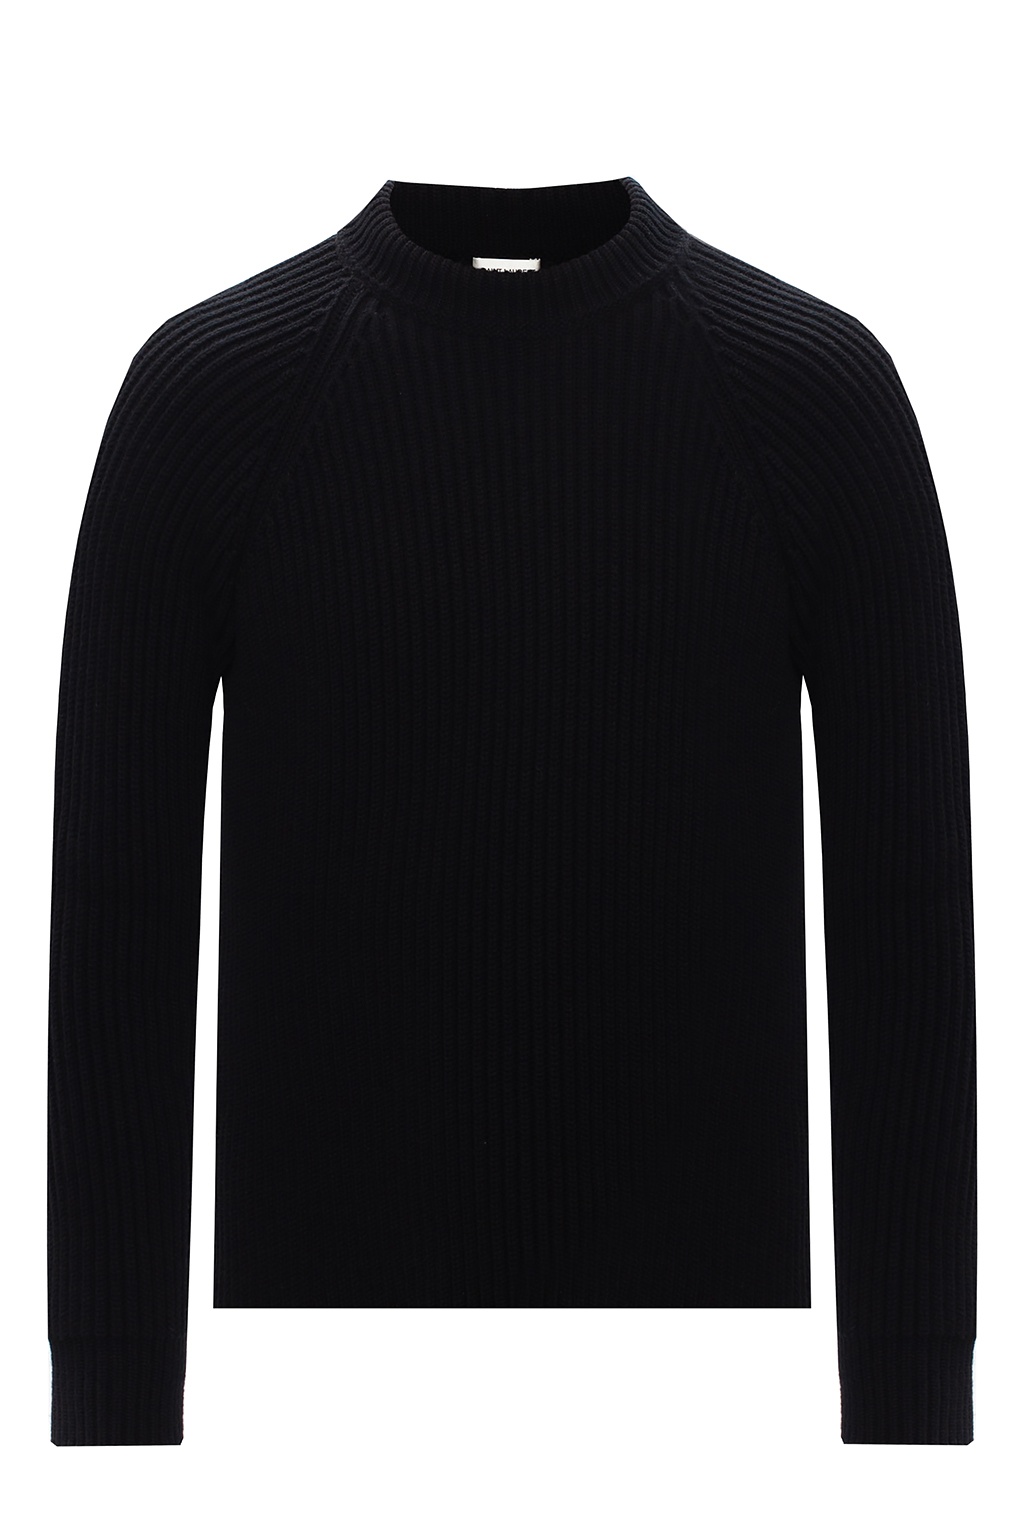 Saint Laurent Rib-knit sweater | Men's Clothing | Vitkac